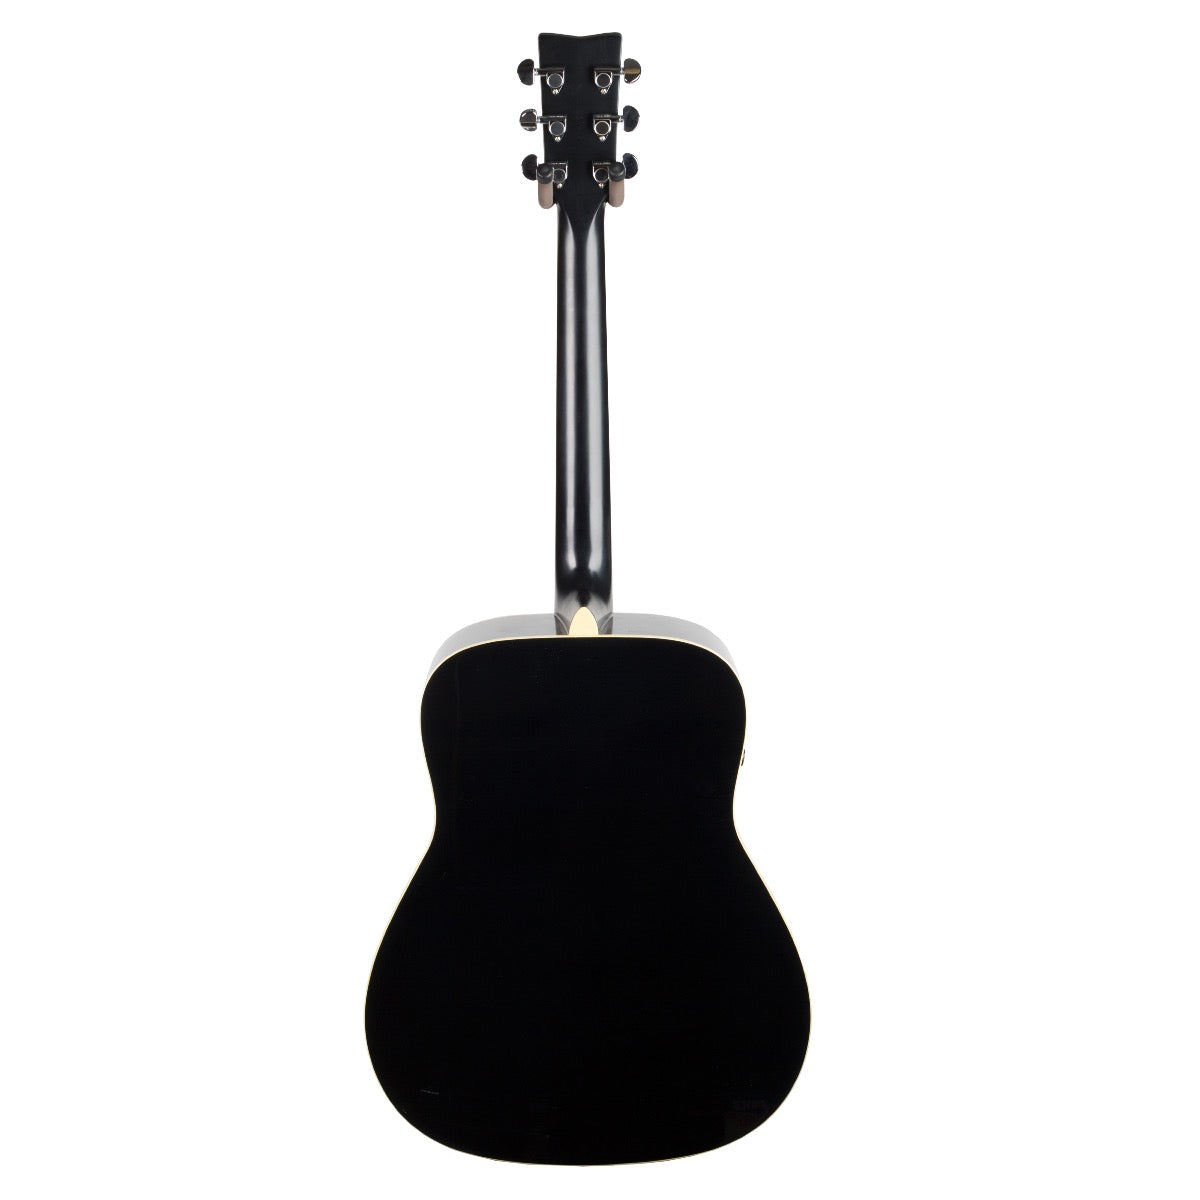 Yamaha FG Series TransAcoustic Folk Body Acoustic Electric Guitar in Black